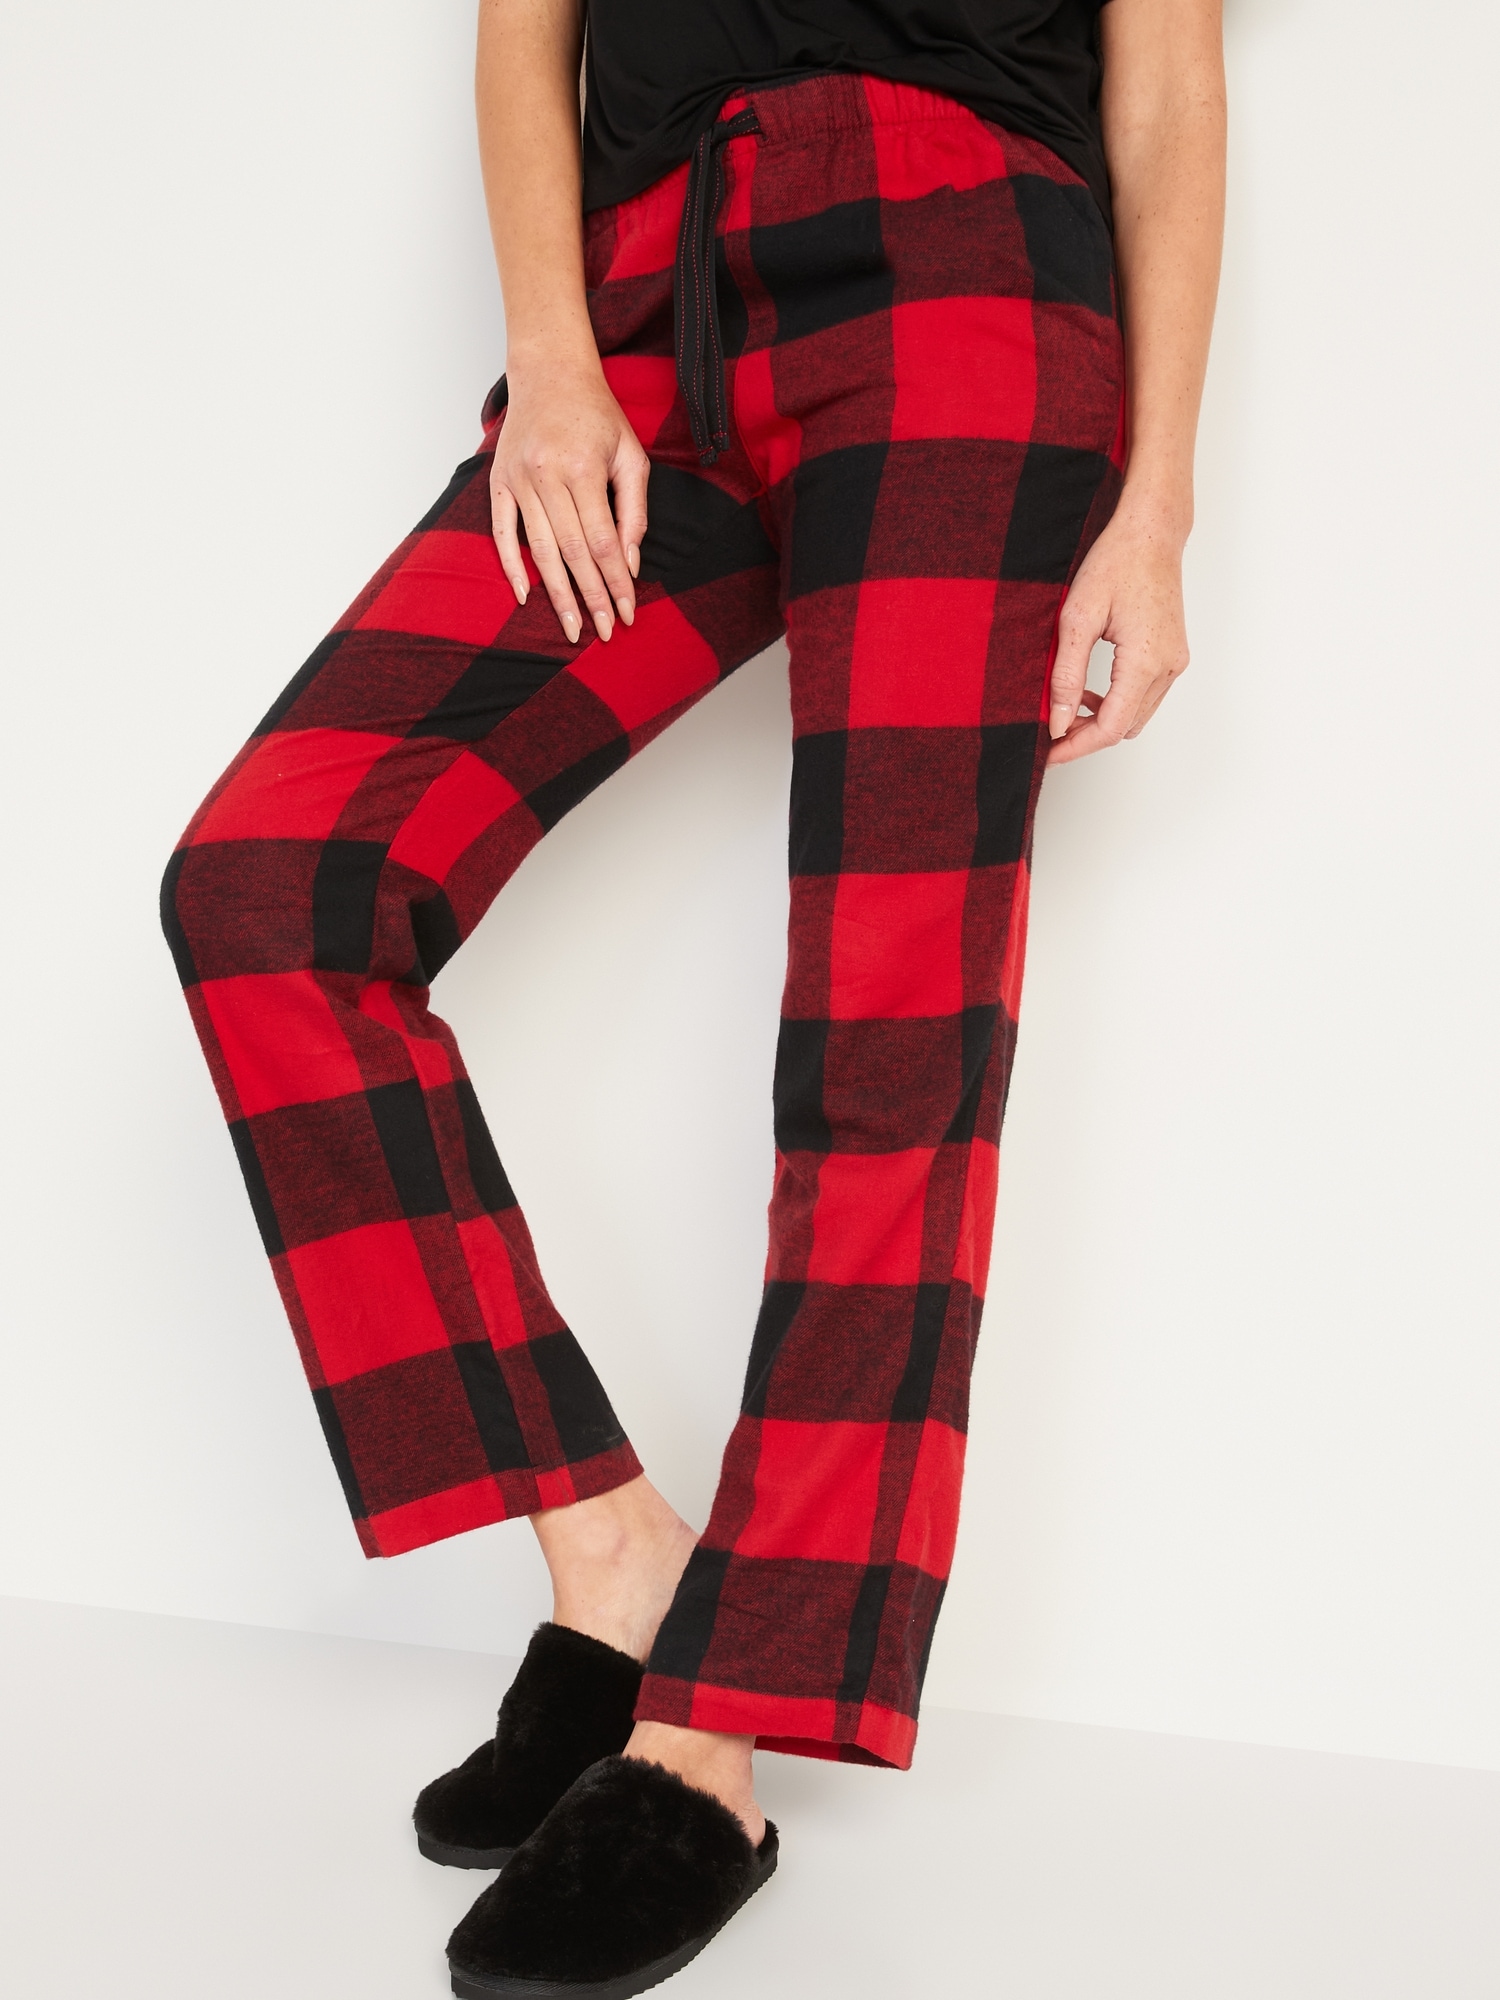 Matching Plaid Flannel Pajama Pants 2-Pack